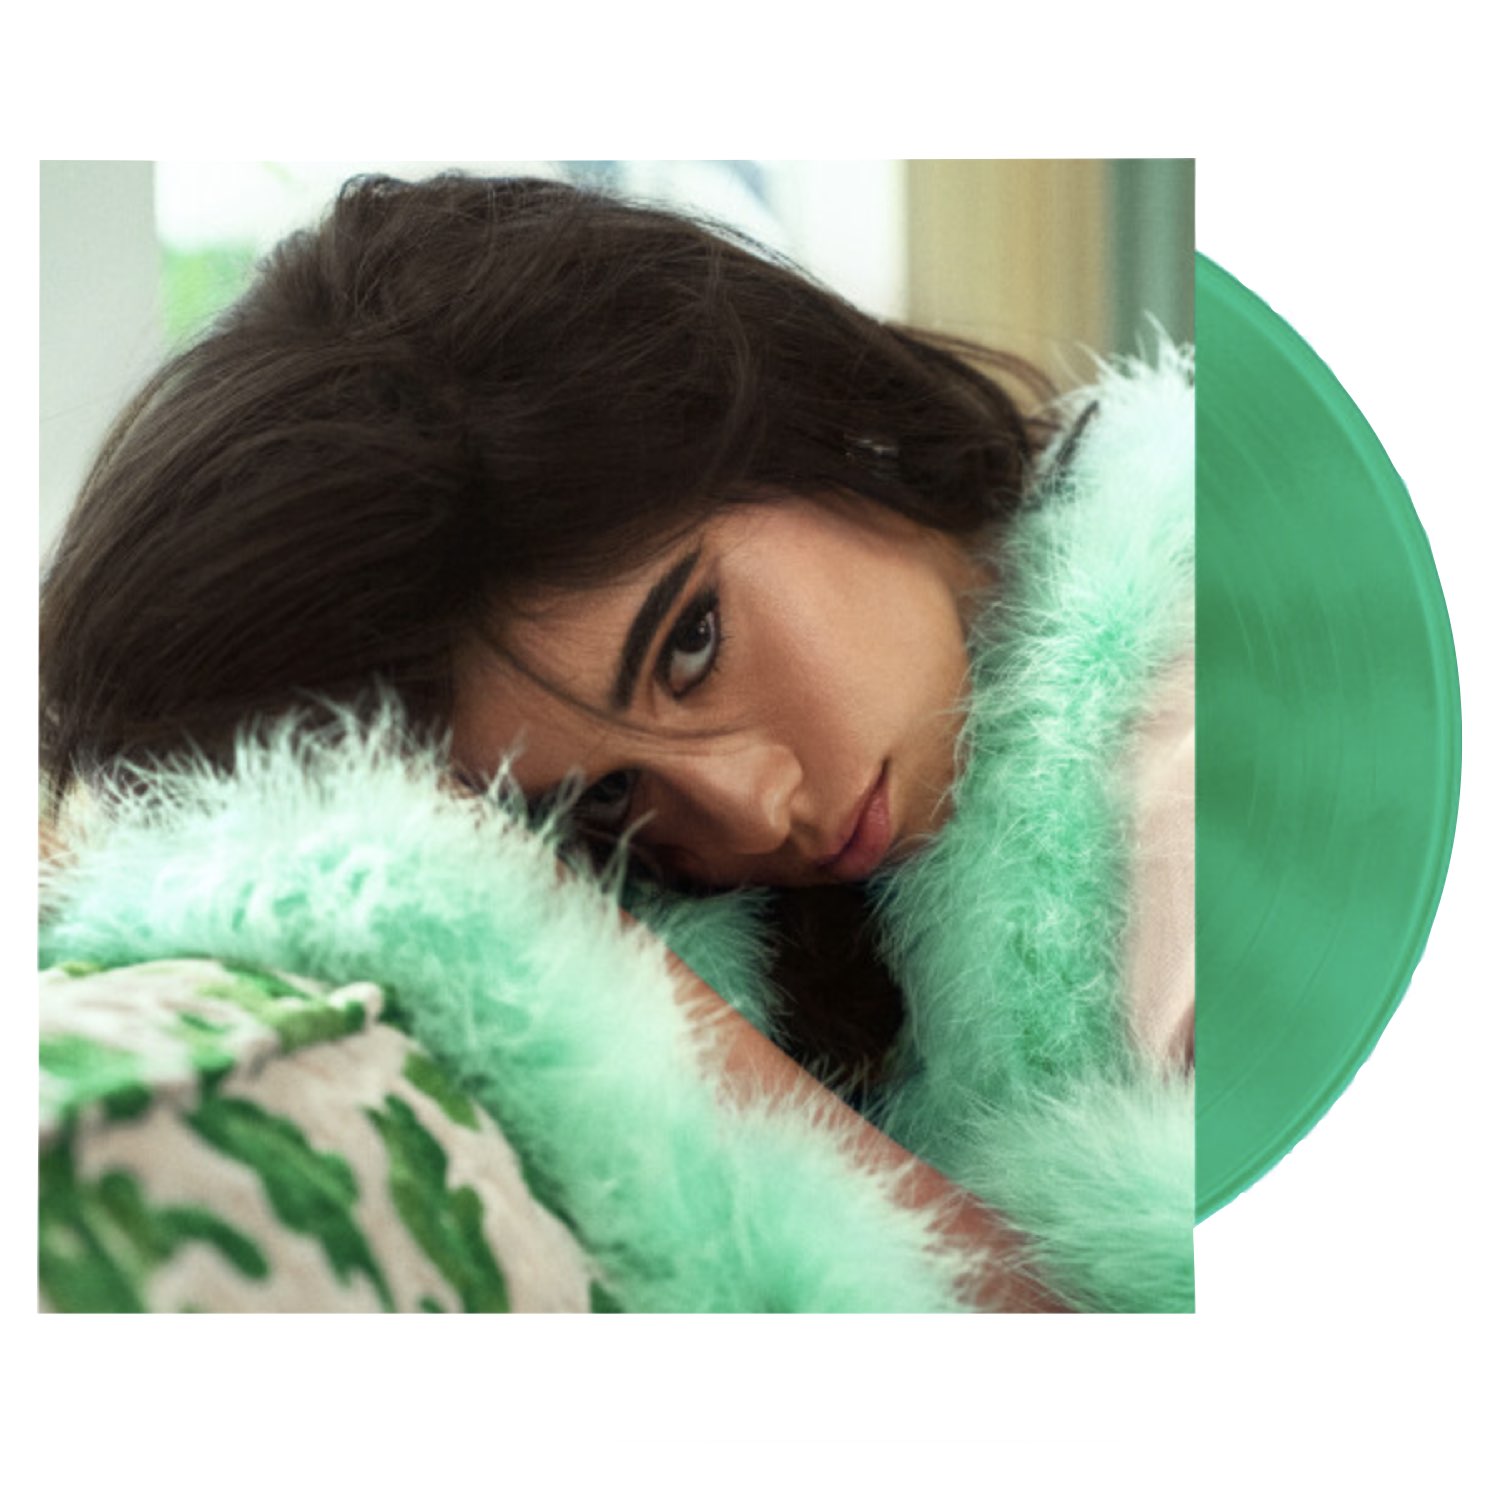 Camila Cabello - Familia [Limited Edition - Alternate Cover with Green Translucent Vinyl] - Walmart Exclusive